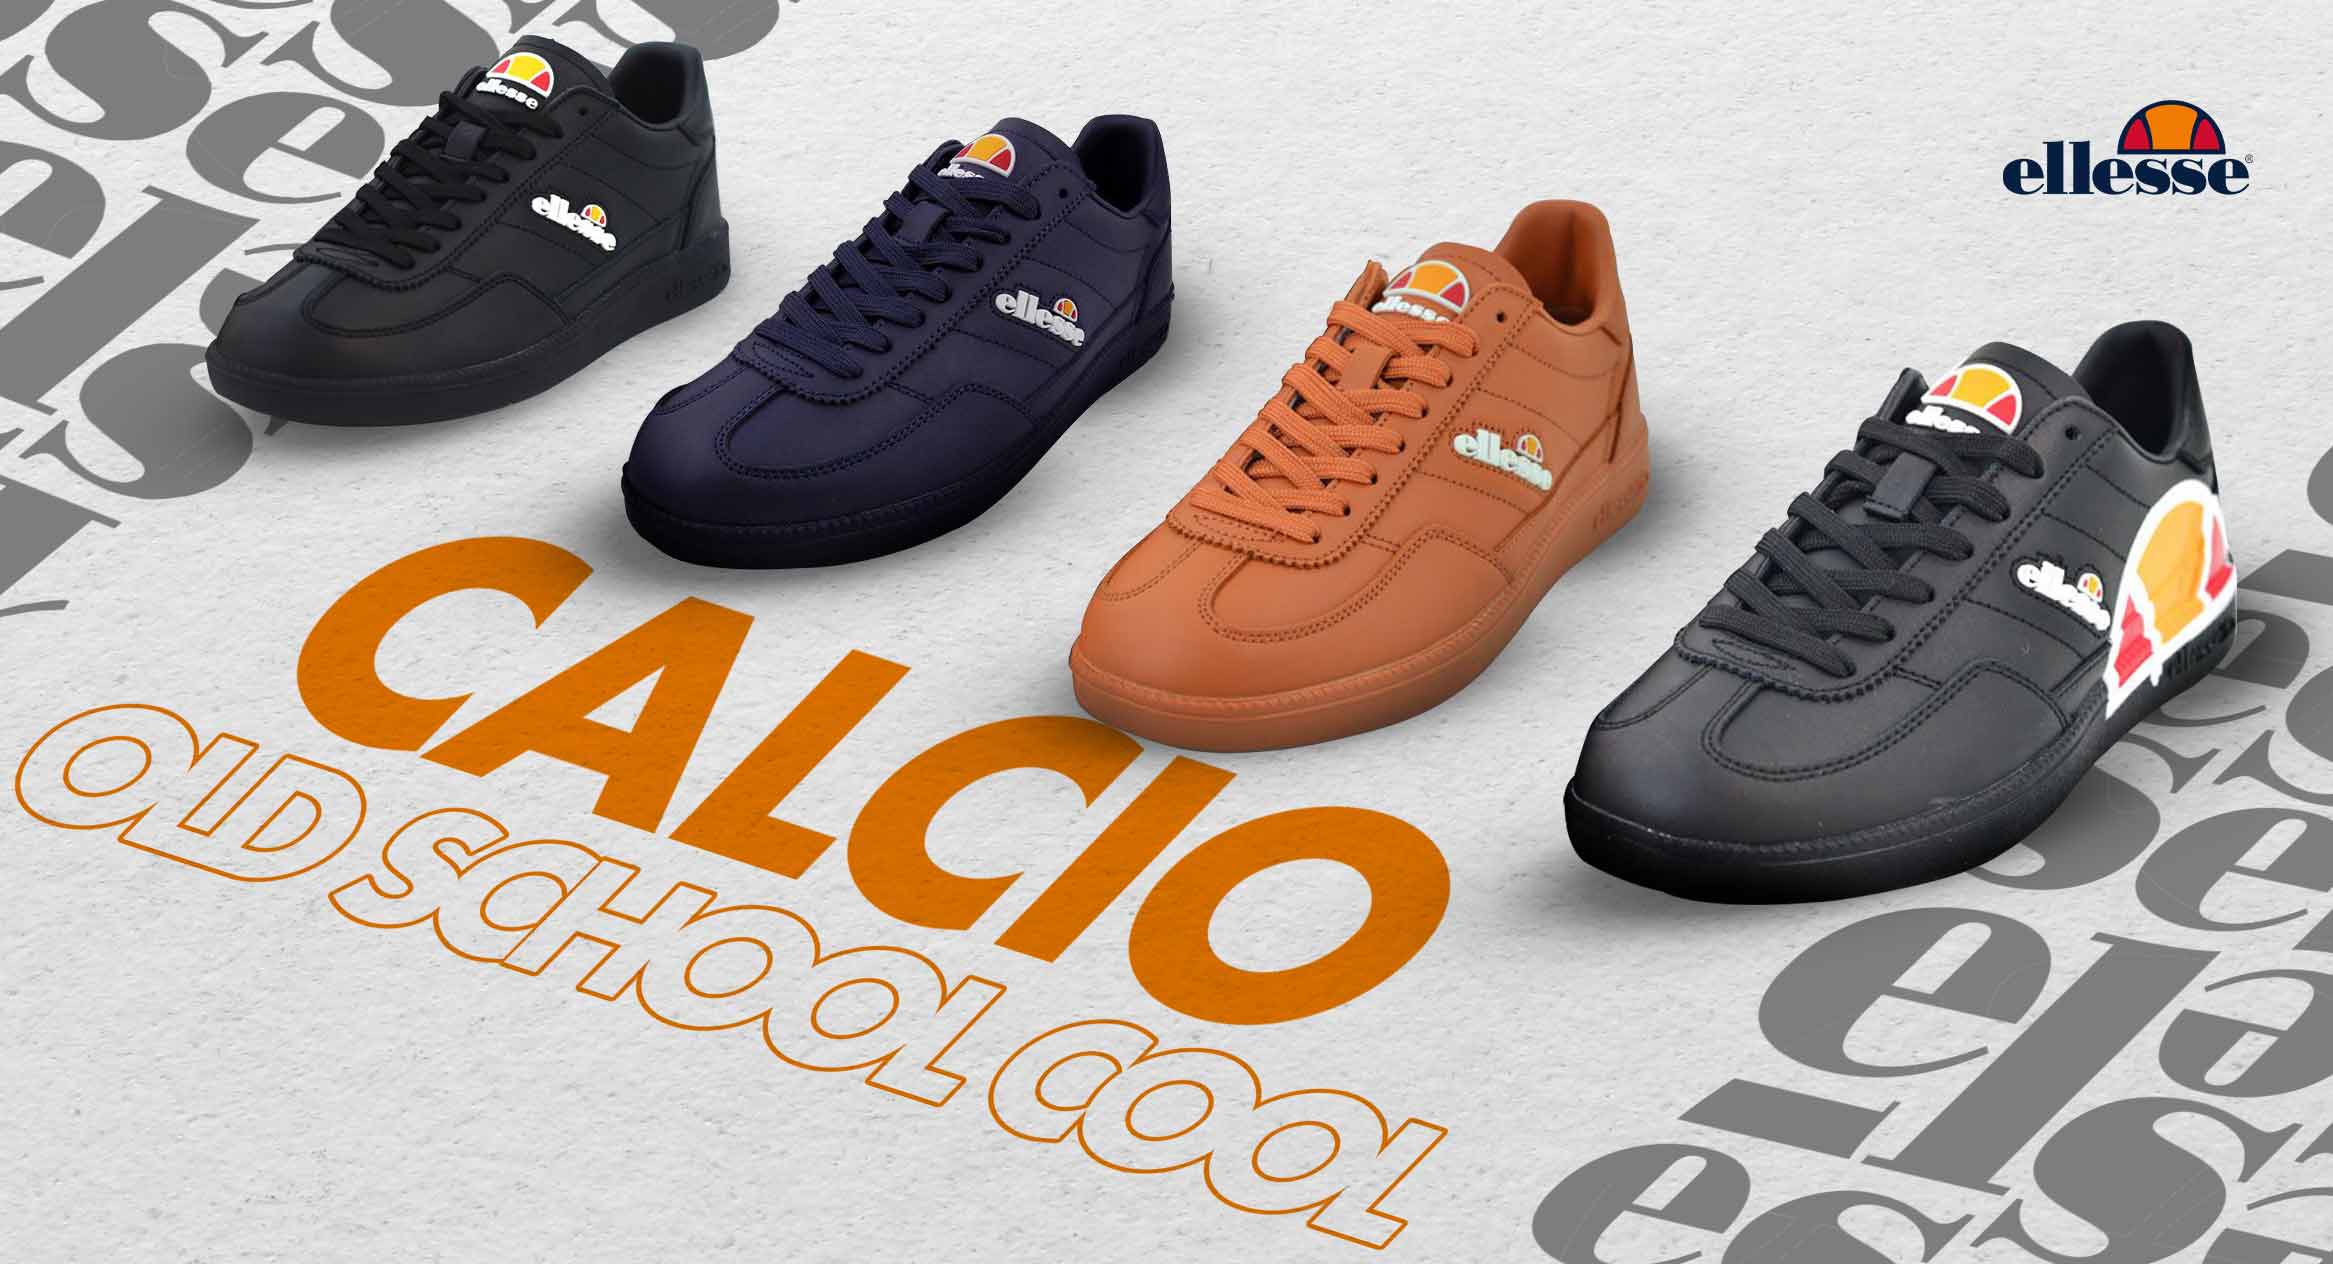 School Cool the ellesse Calcio Sneaker - Blog Side Step